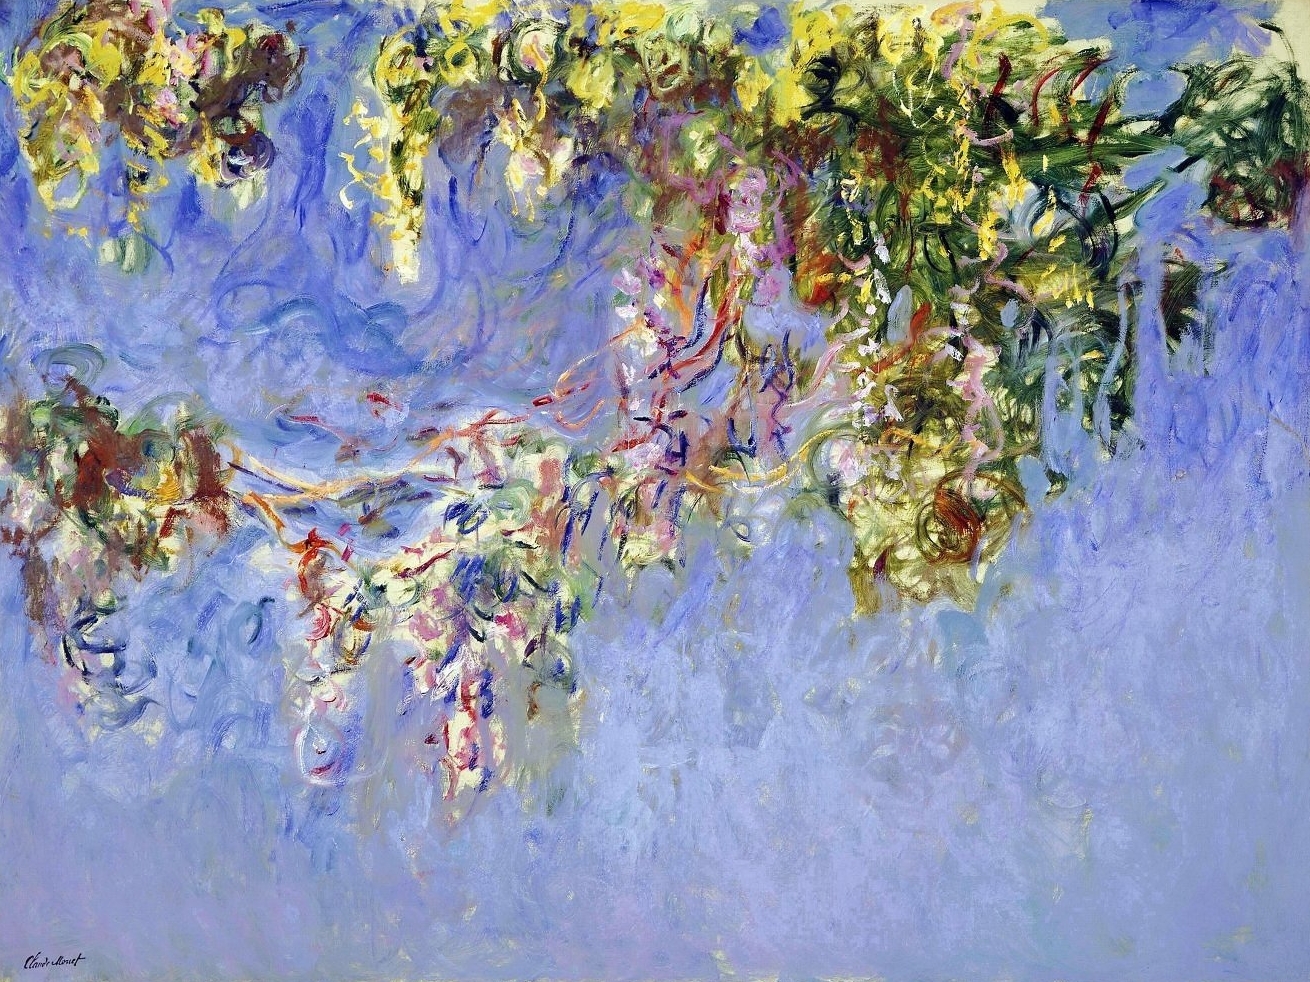 Claude+Monet-1840-1926 (232).jpg